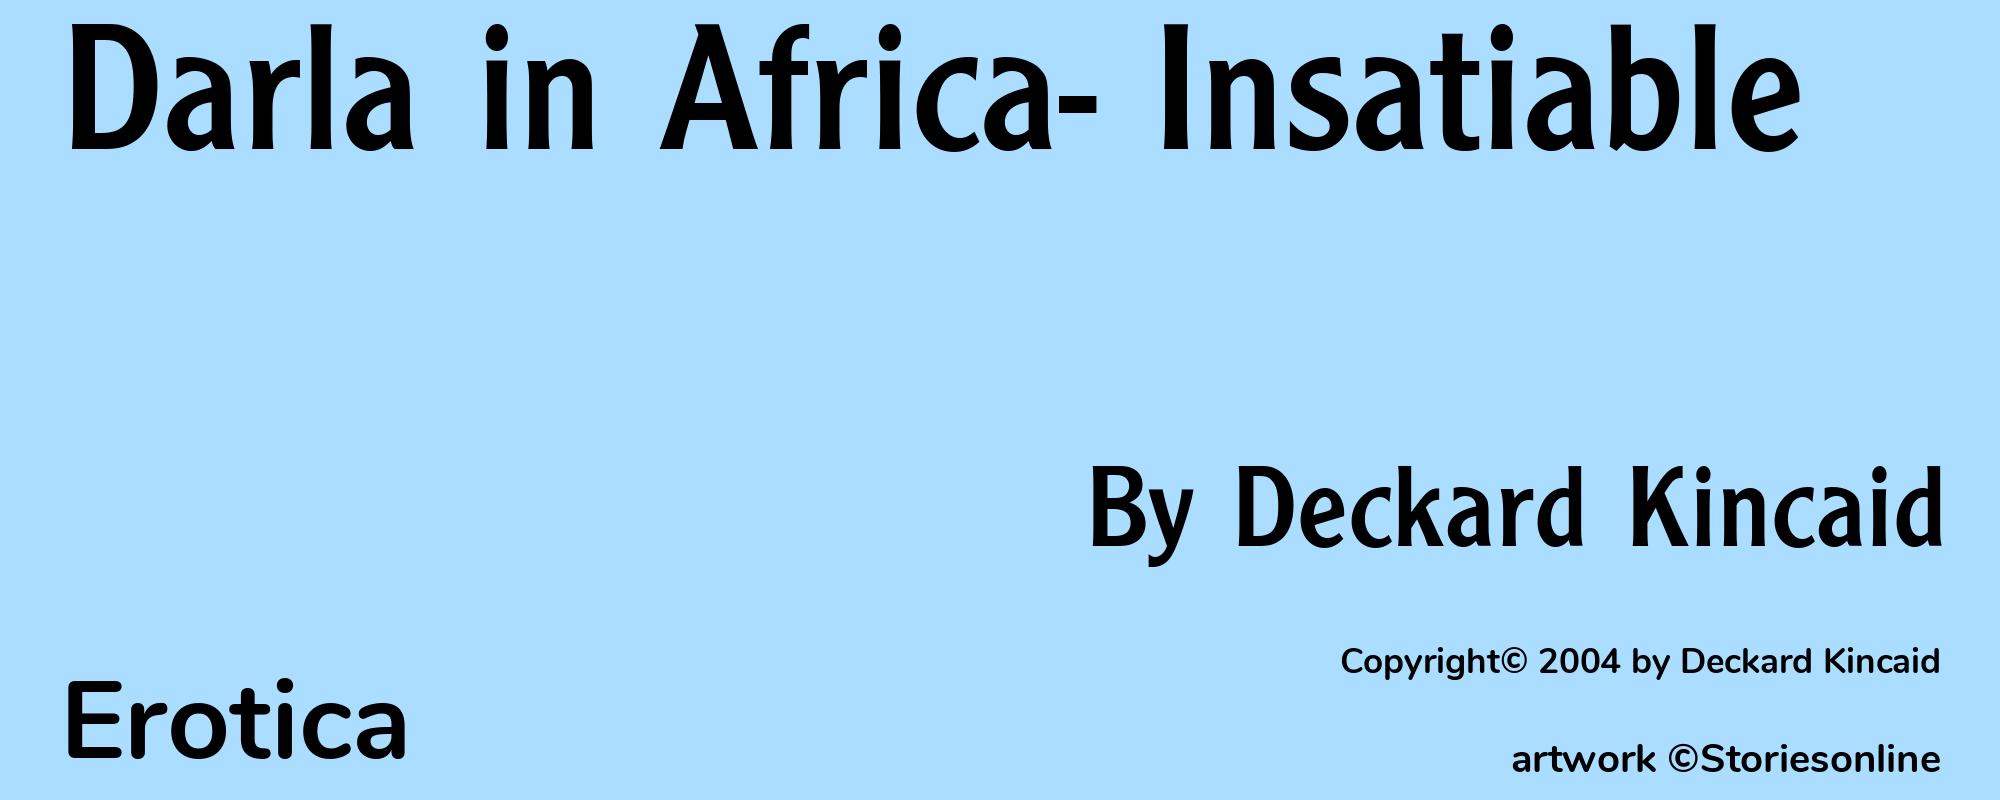 Darla in Africa- Insatiable - Cover